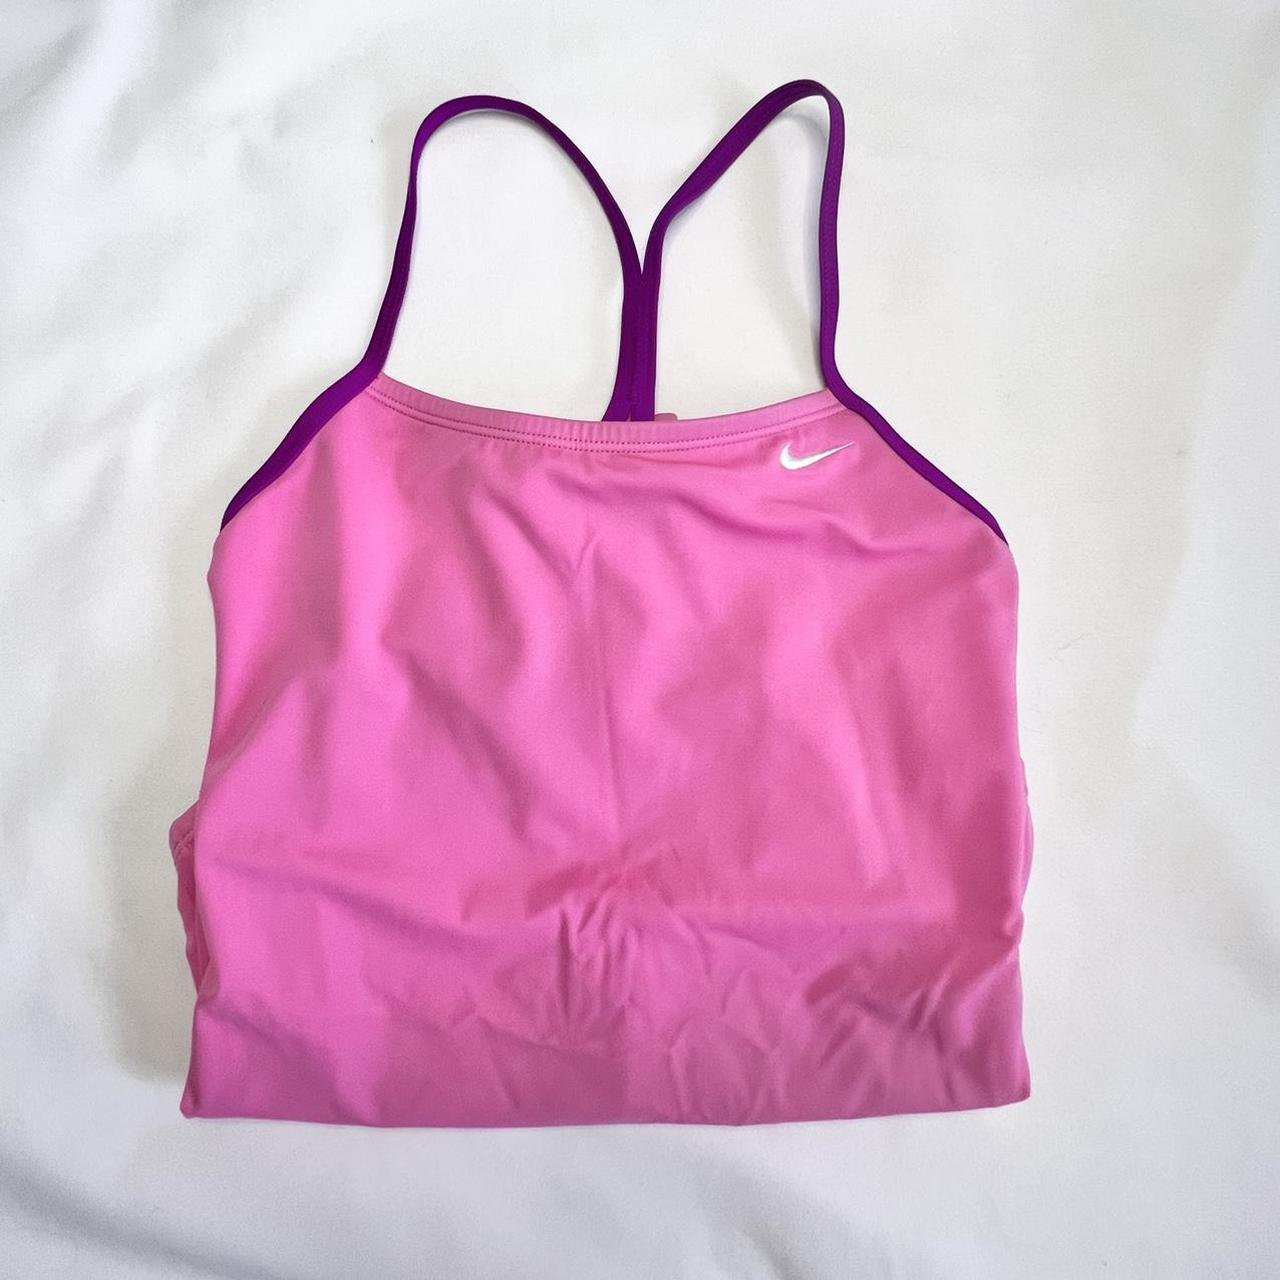 Nike one piece bathing suit 💗 Pink Nike bikini... - Depop